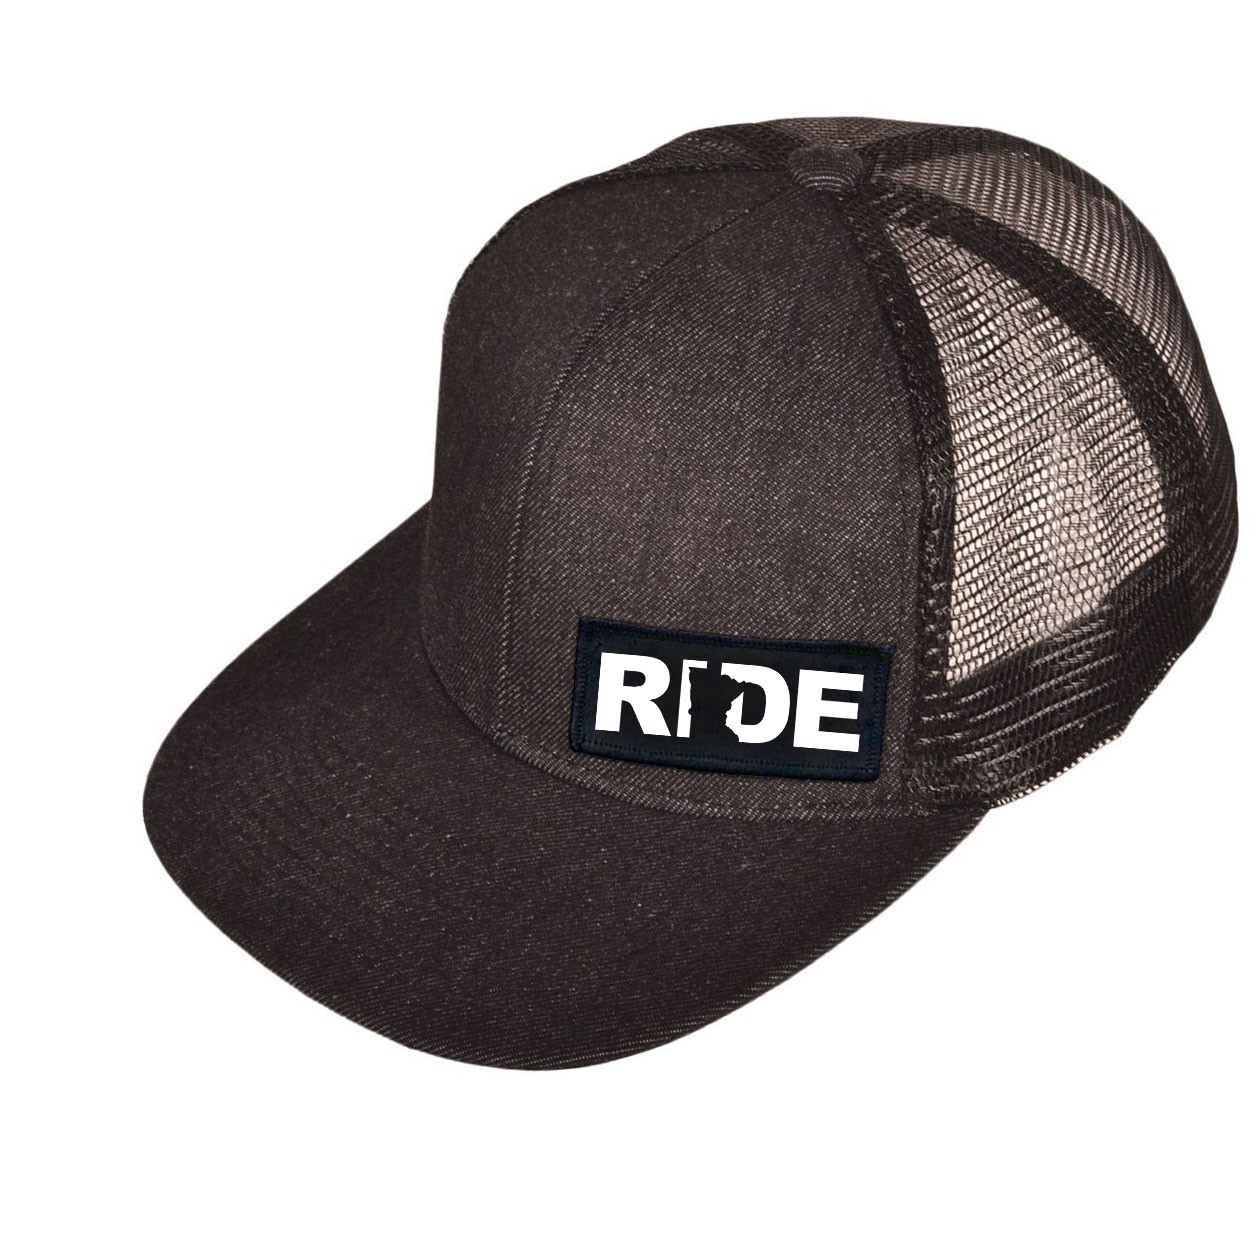 Ride Minnesota Night Out Woven Patch Snapback Flat Brim Hat Black Denim